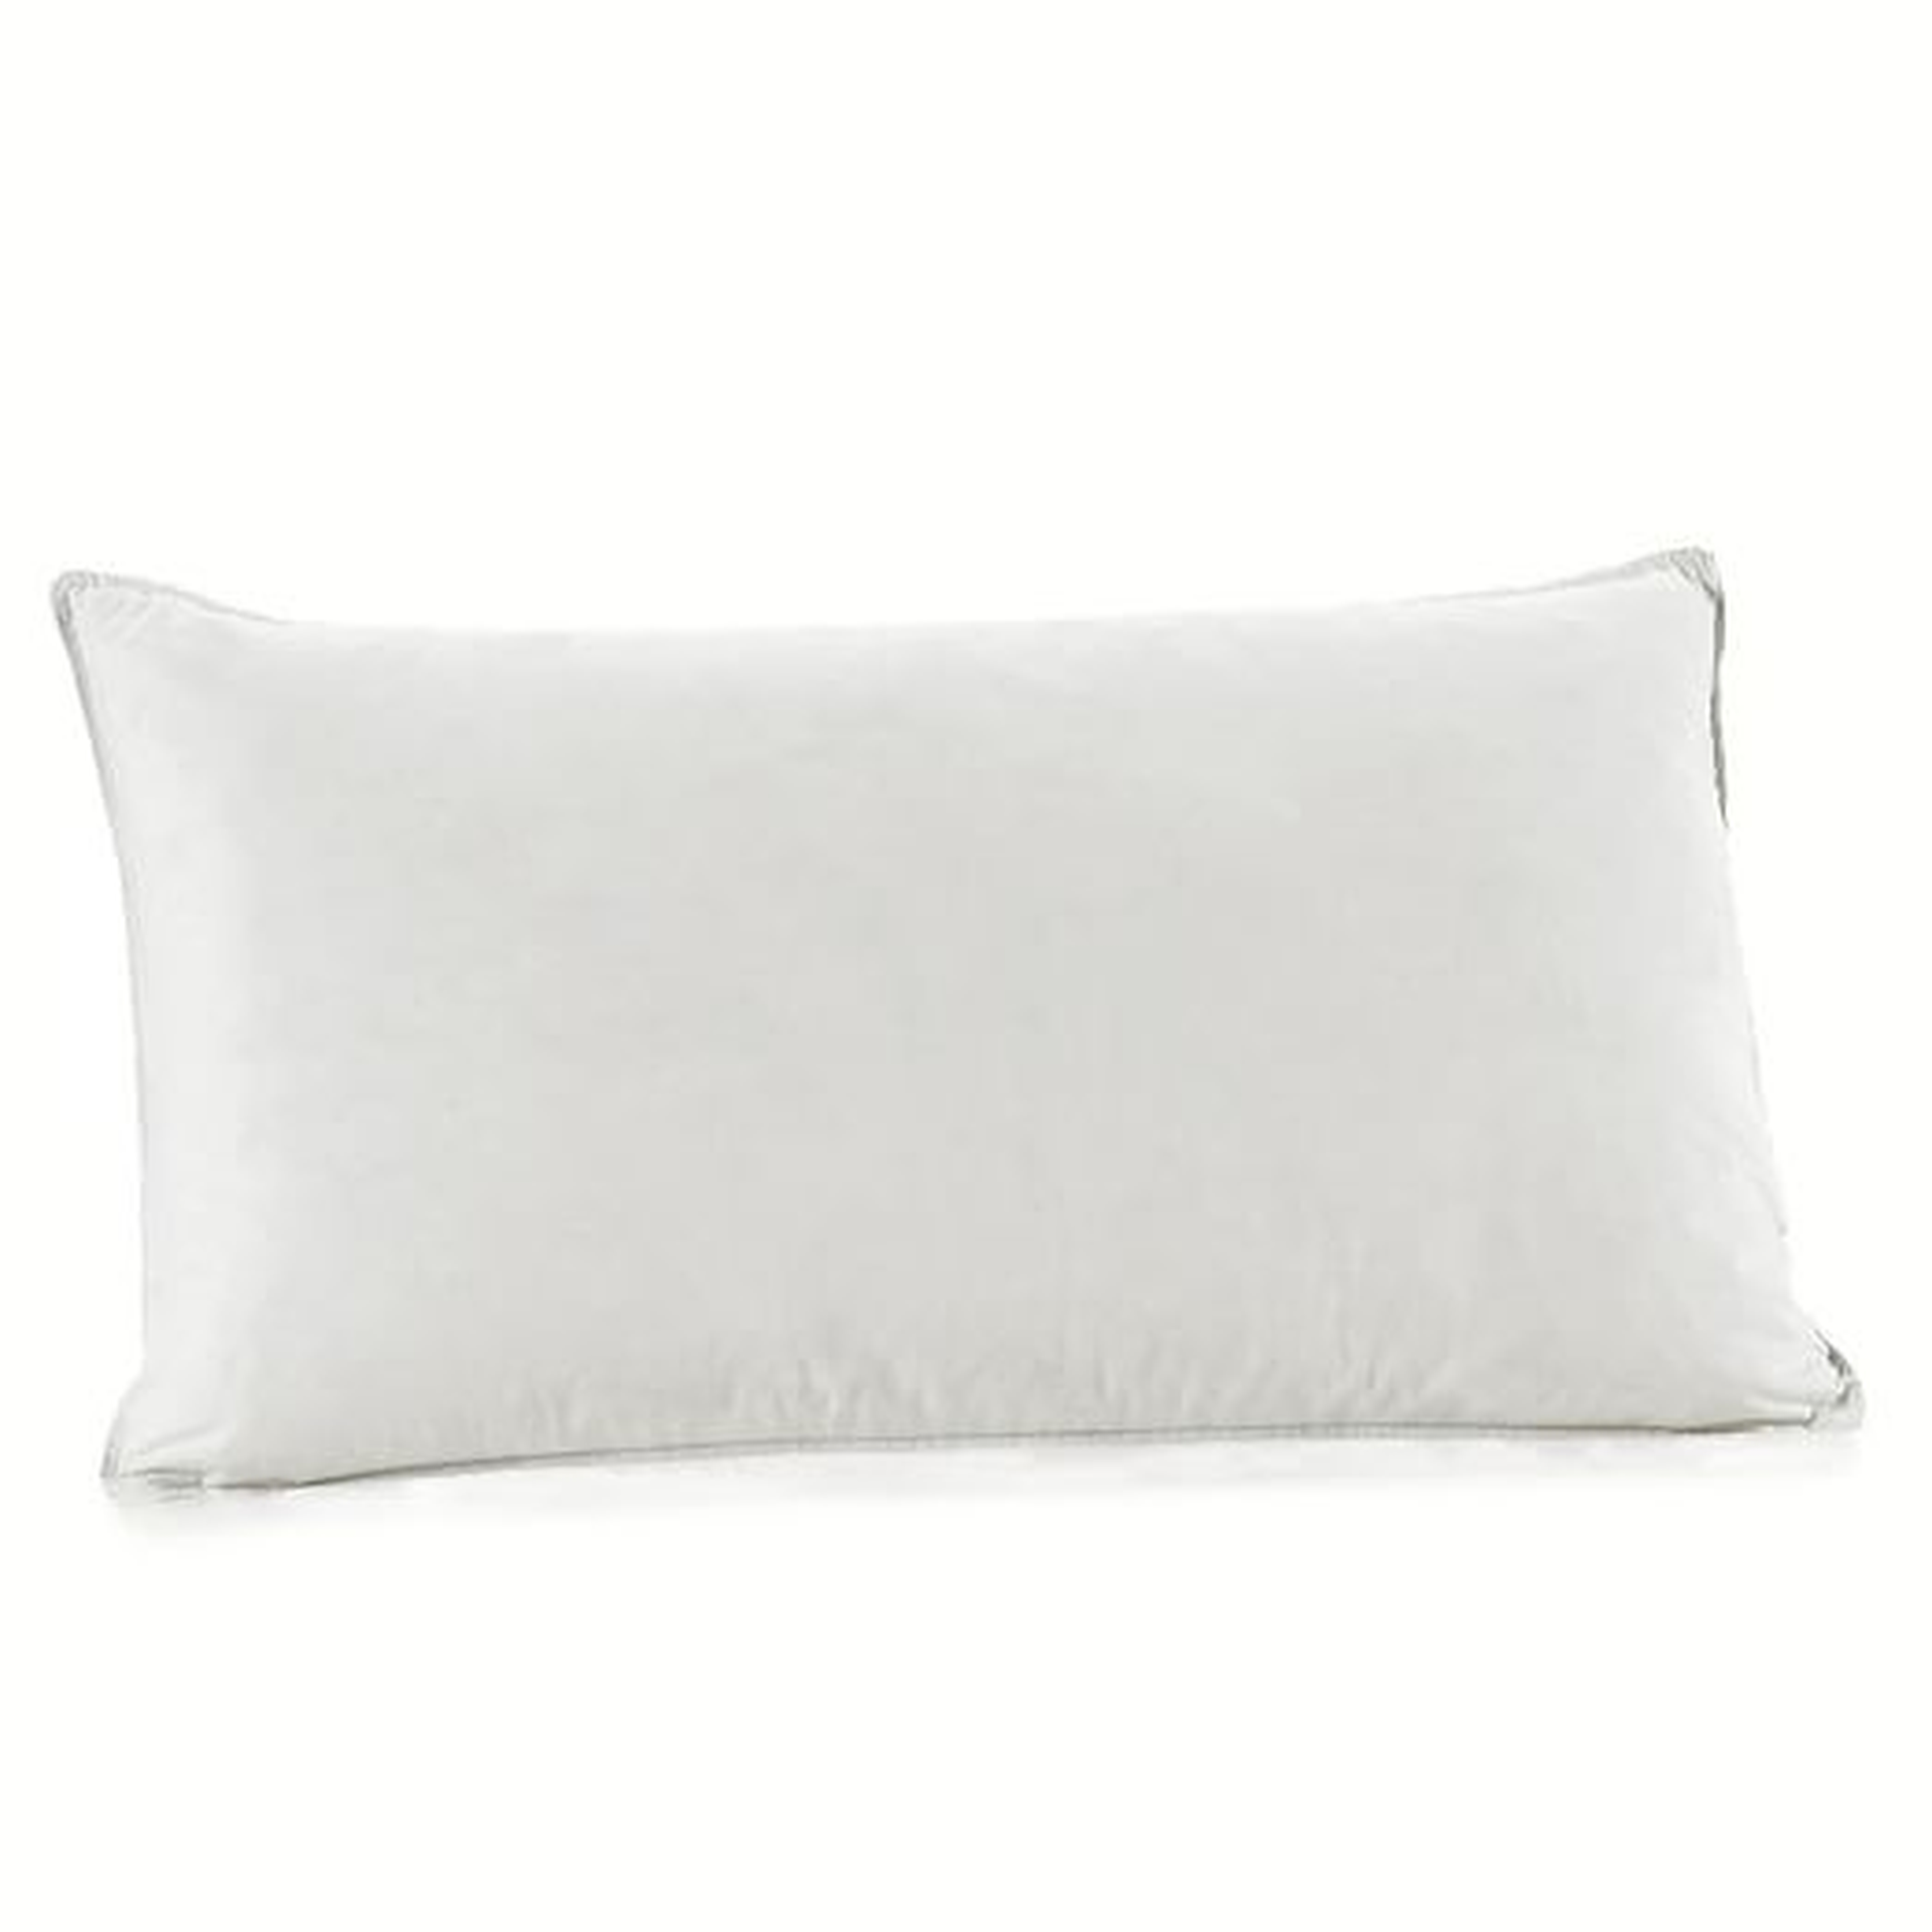 Decorative Pillow Insert – 12" x 21" - Poly Insert - West Elm